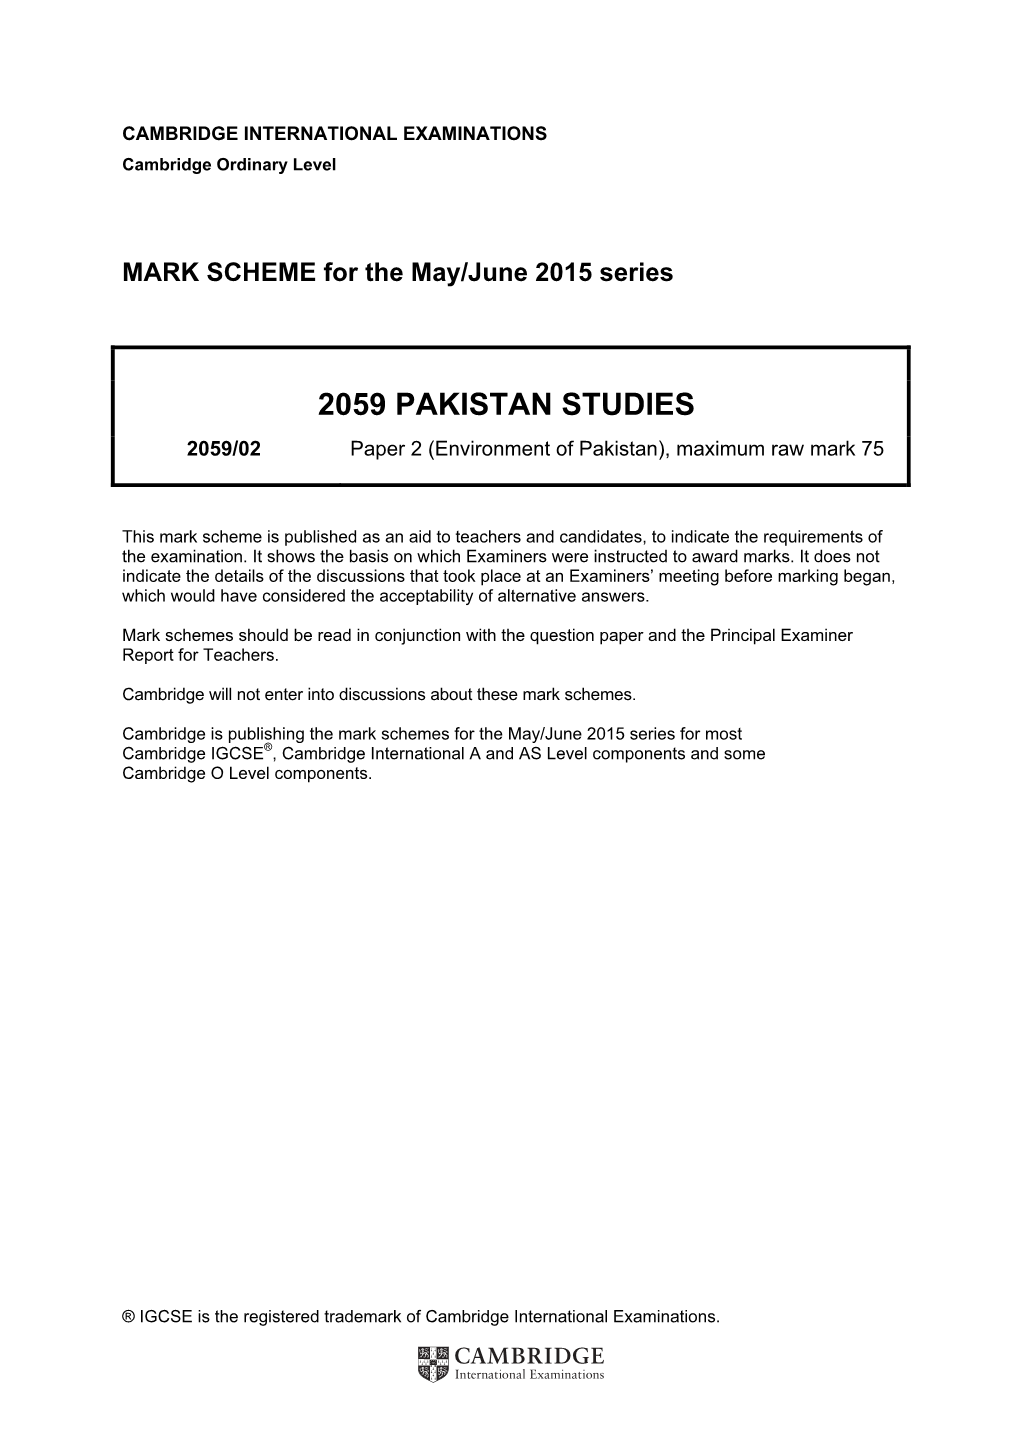 2059 PAKISTAN STUDIES 2059/02 Paper 2 (Environment of Pakistan), Maximum Raw Mark 75